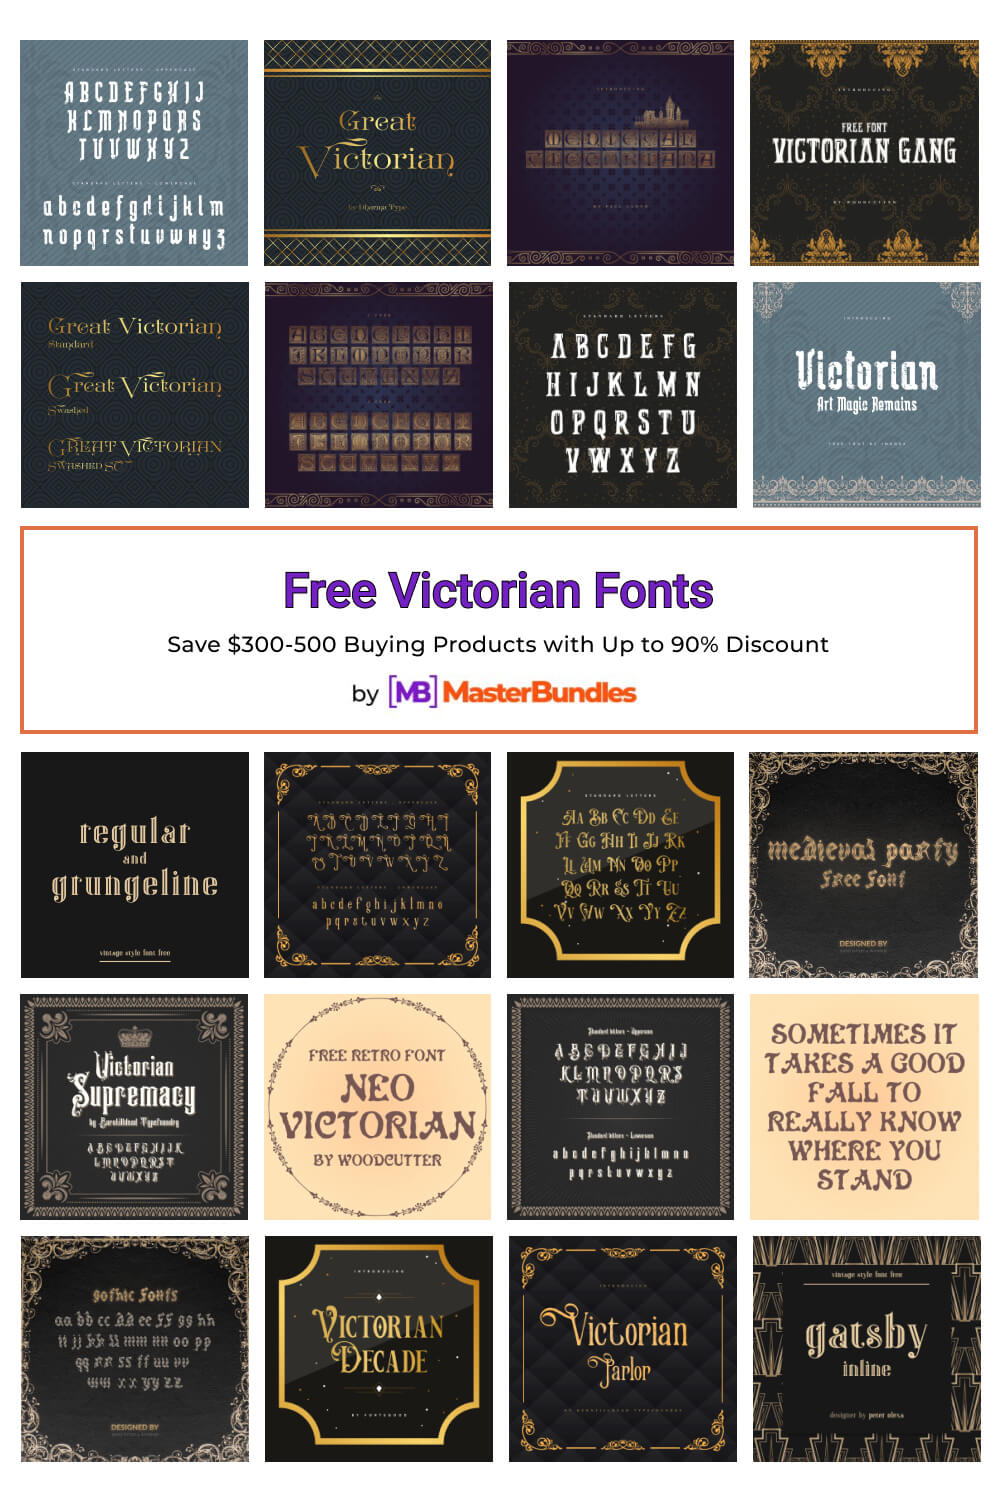 free victorian fonts pinterest image.